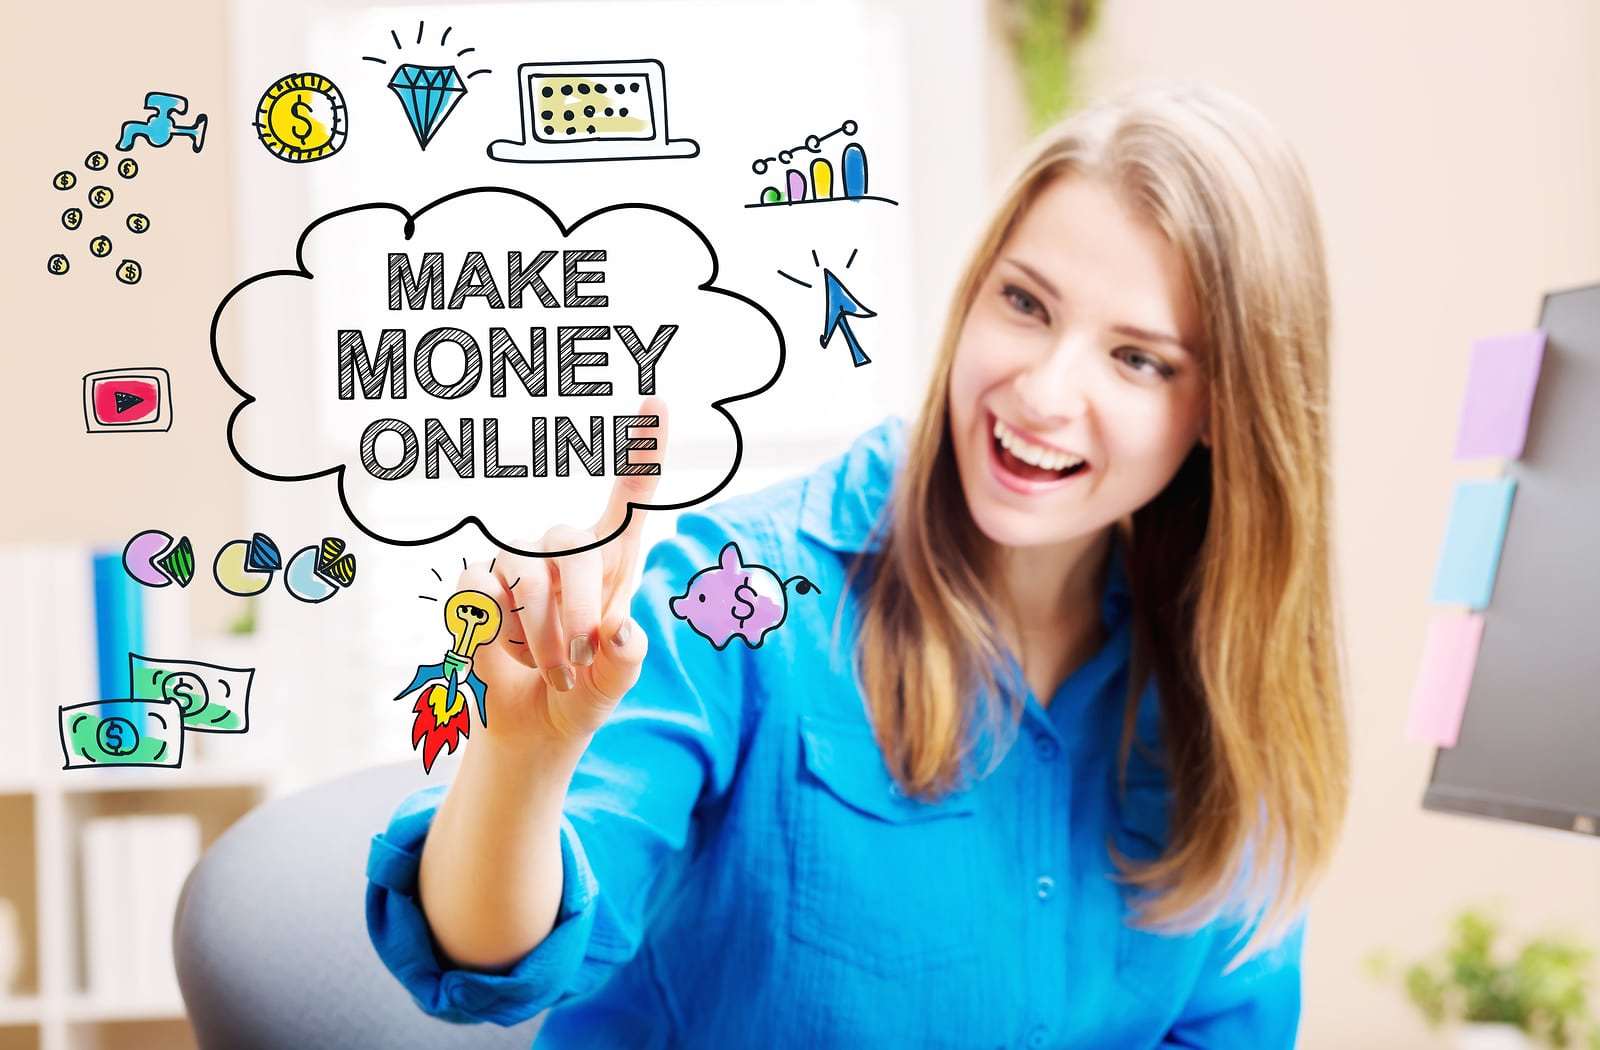 Make money online concept